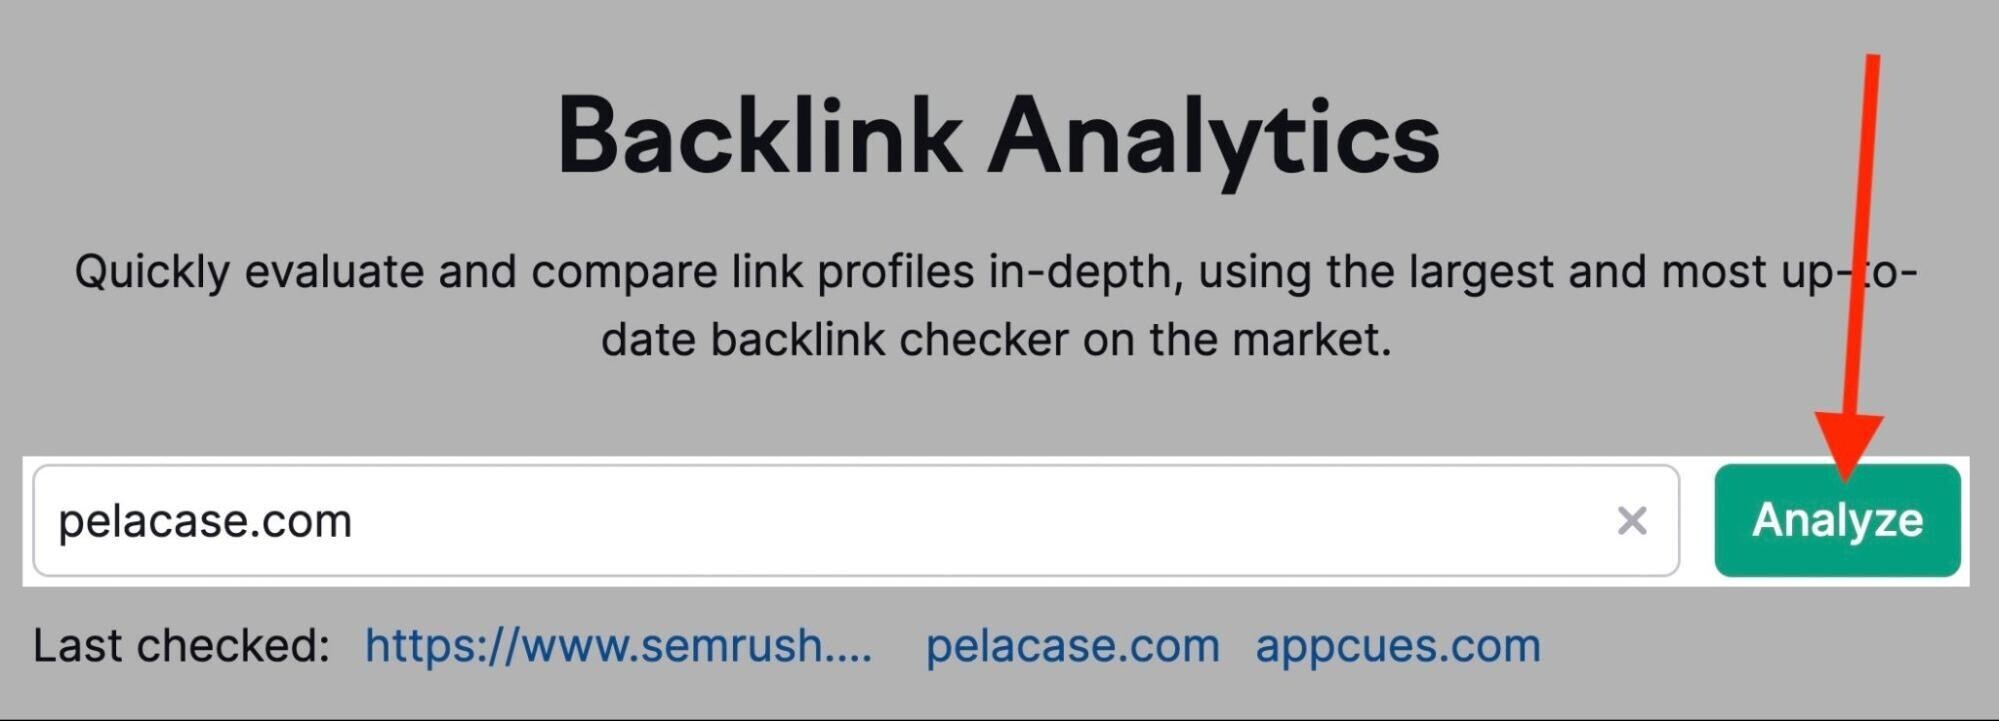 Backlink Analytics